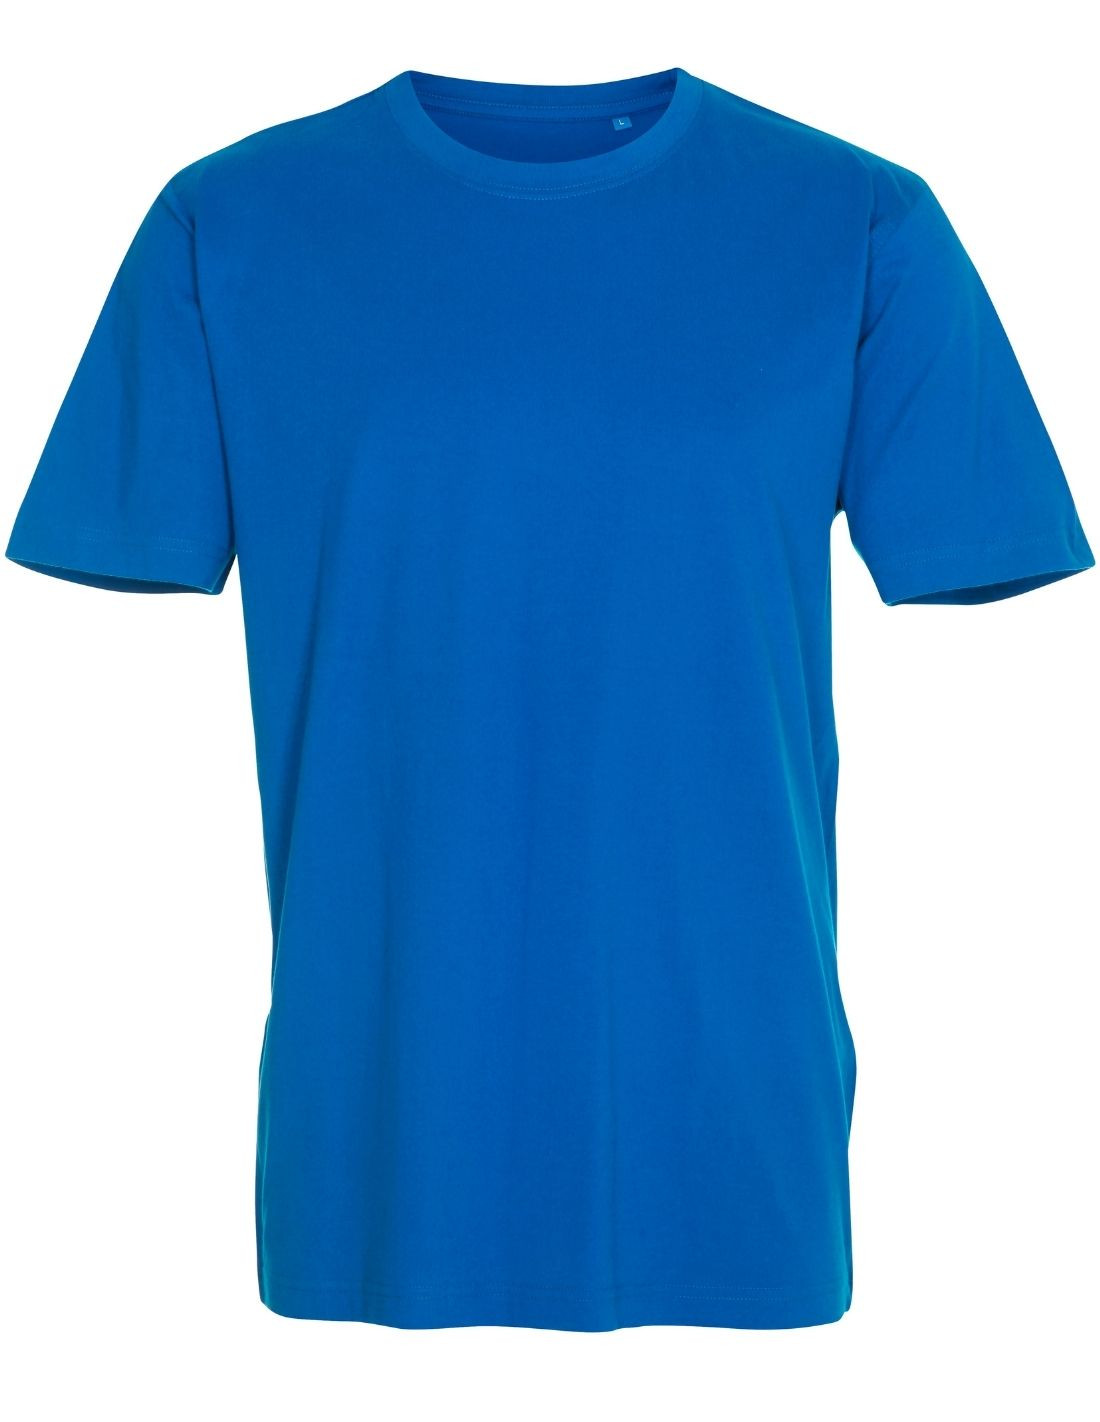 Premium T-Shirt Swedish Blue - ST102SBLUE-R